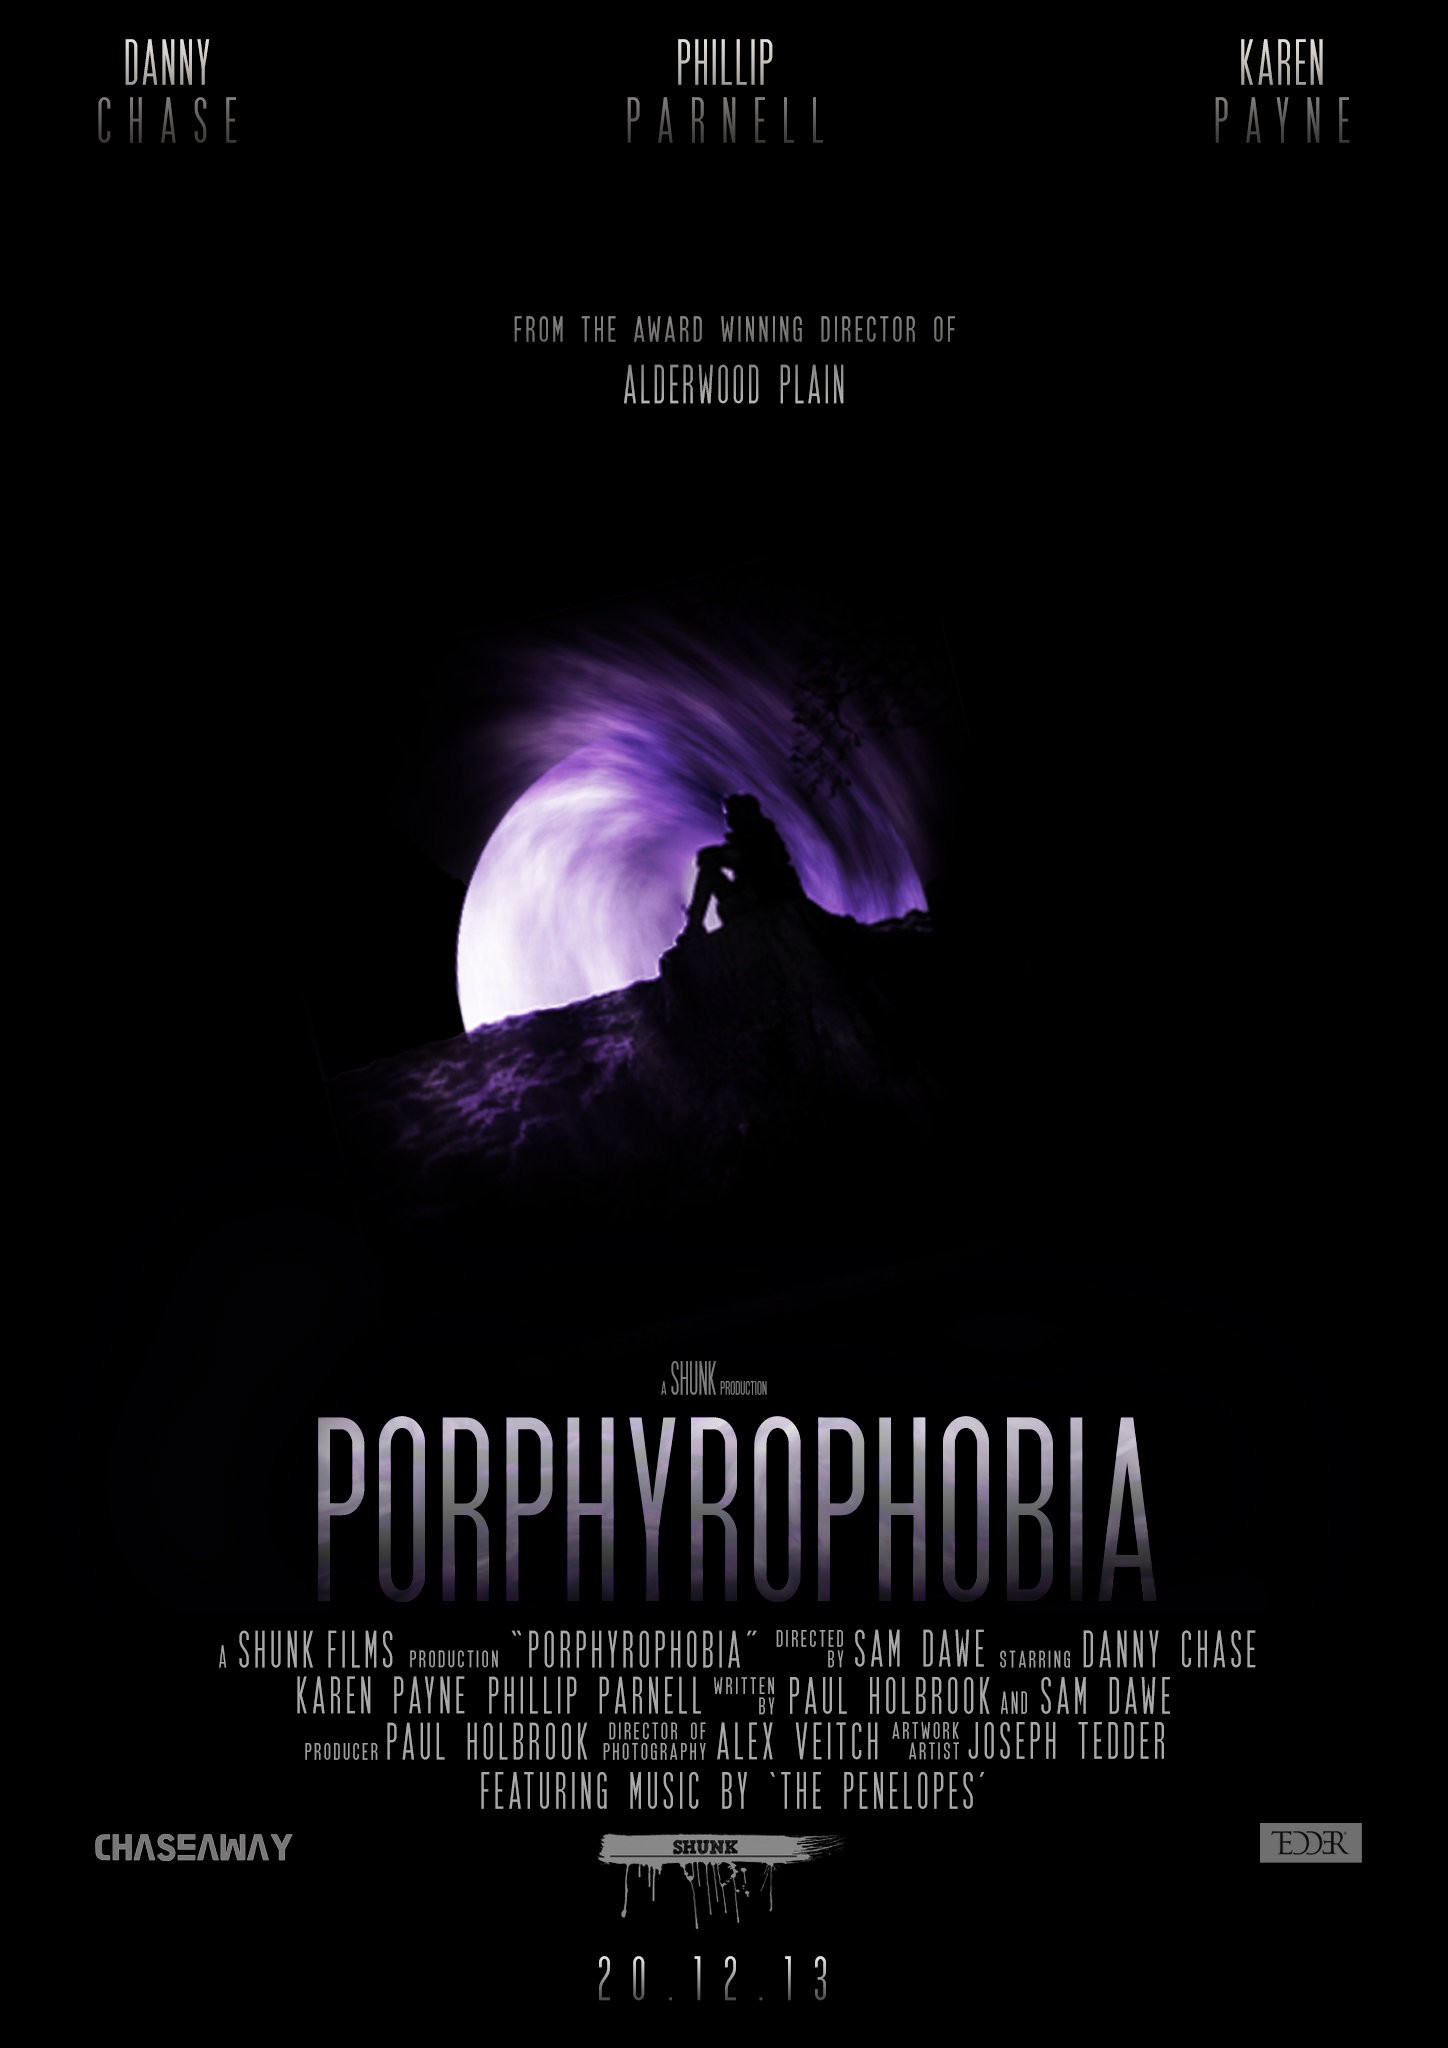 Mega Sized Movie Poster Image for Porphyrophobia